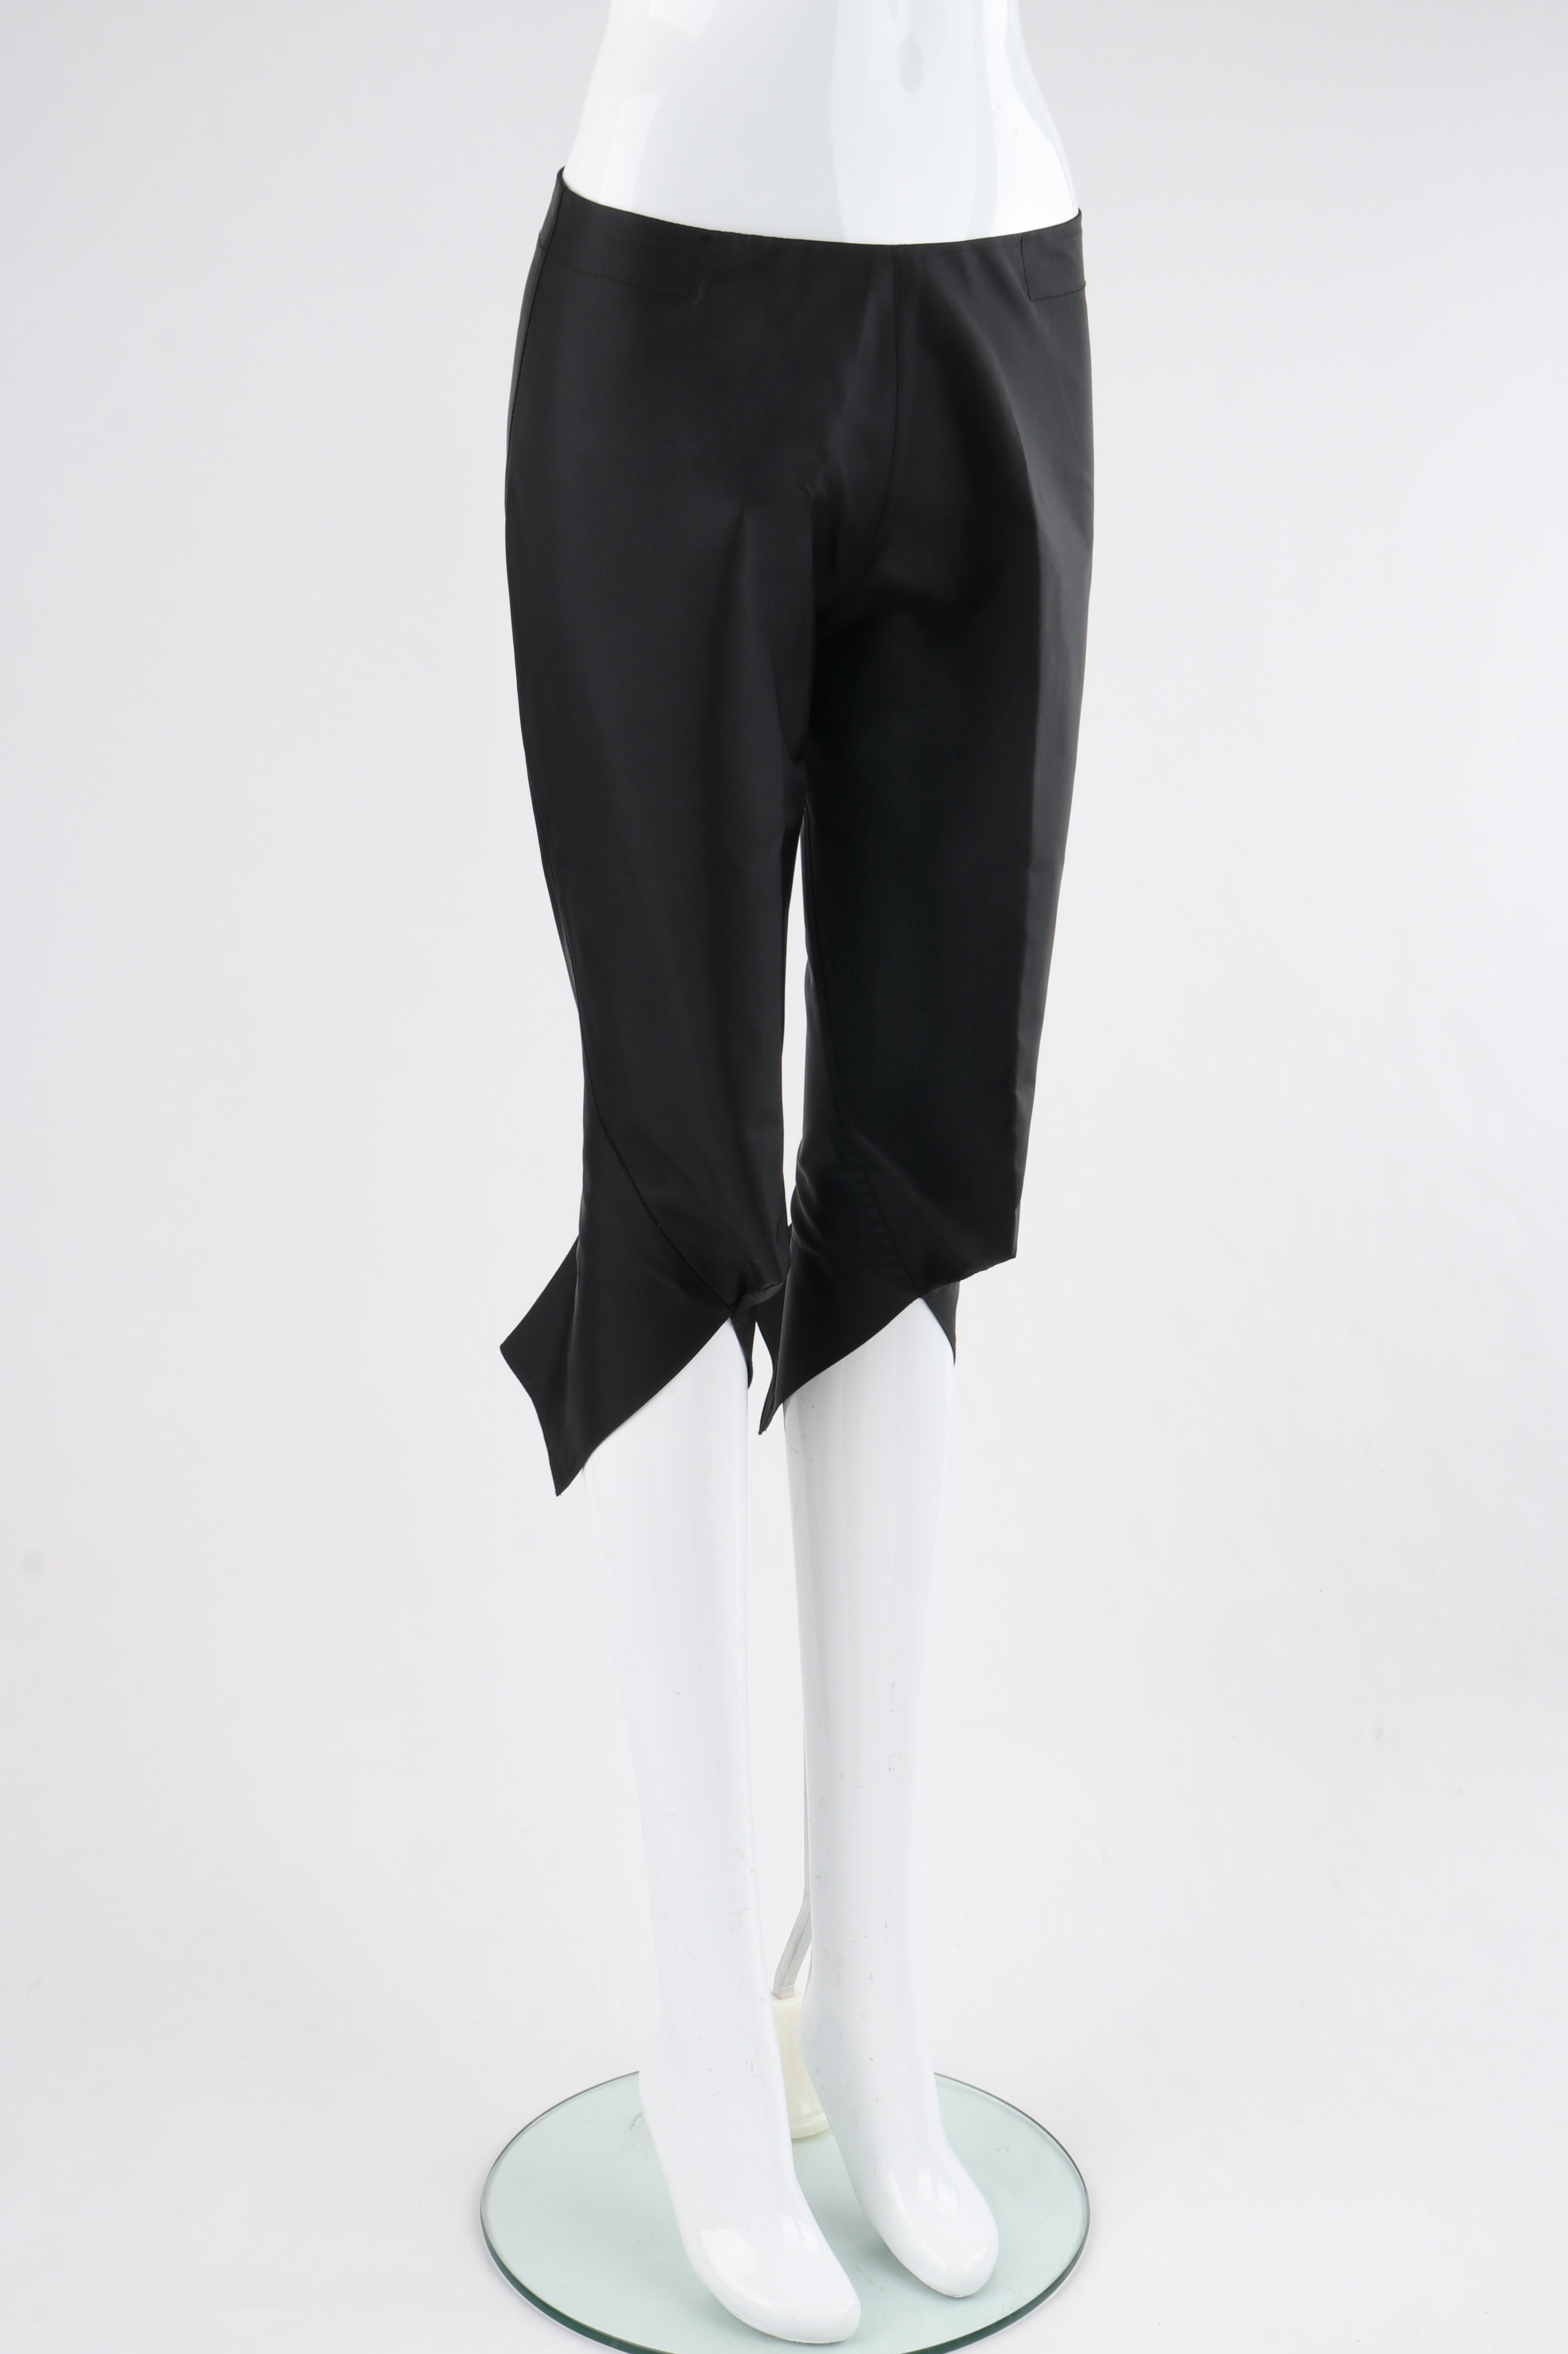 Women's OWEN GASTER c.1996 “Grasshopper” Black Cropped Structured Knicker Trouser Pants For Sale